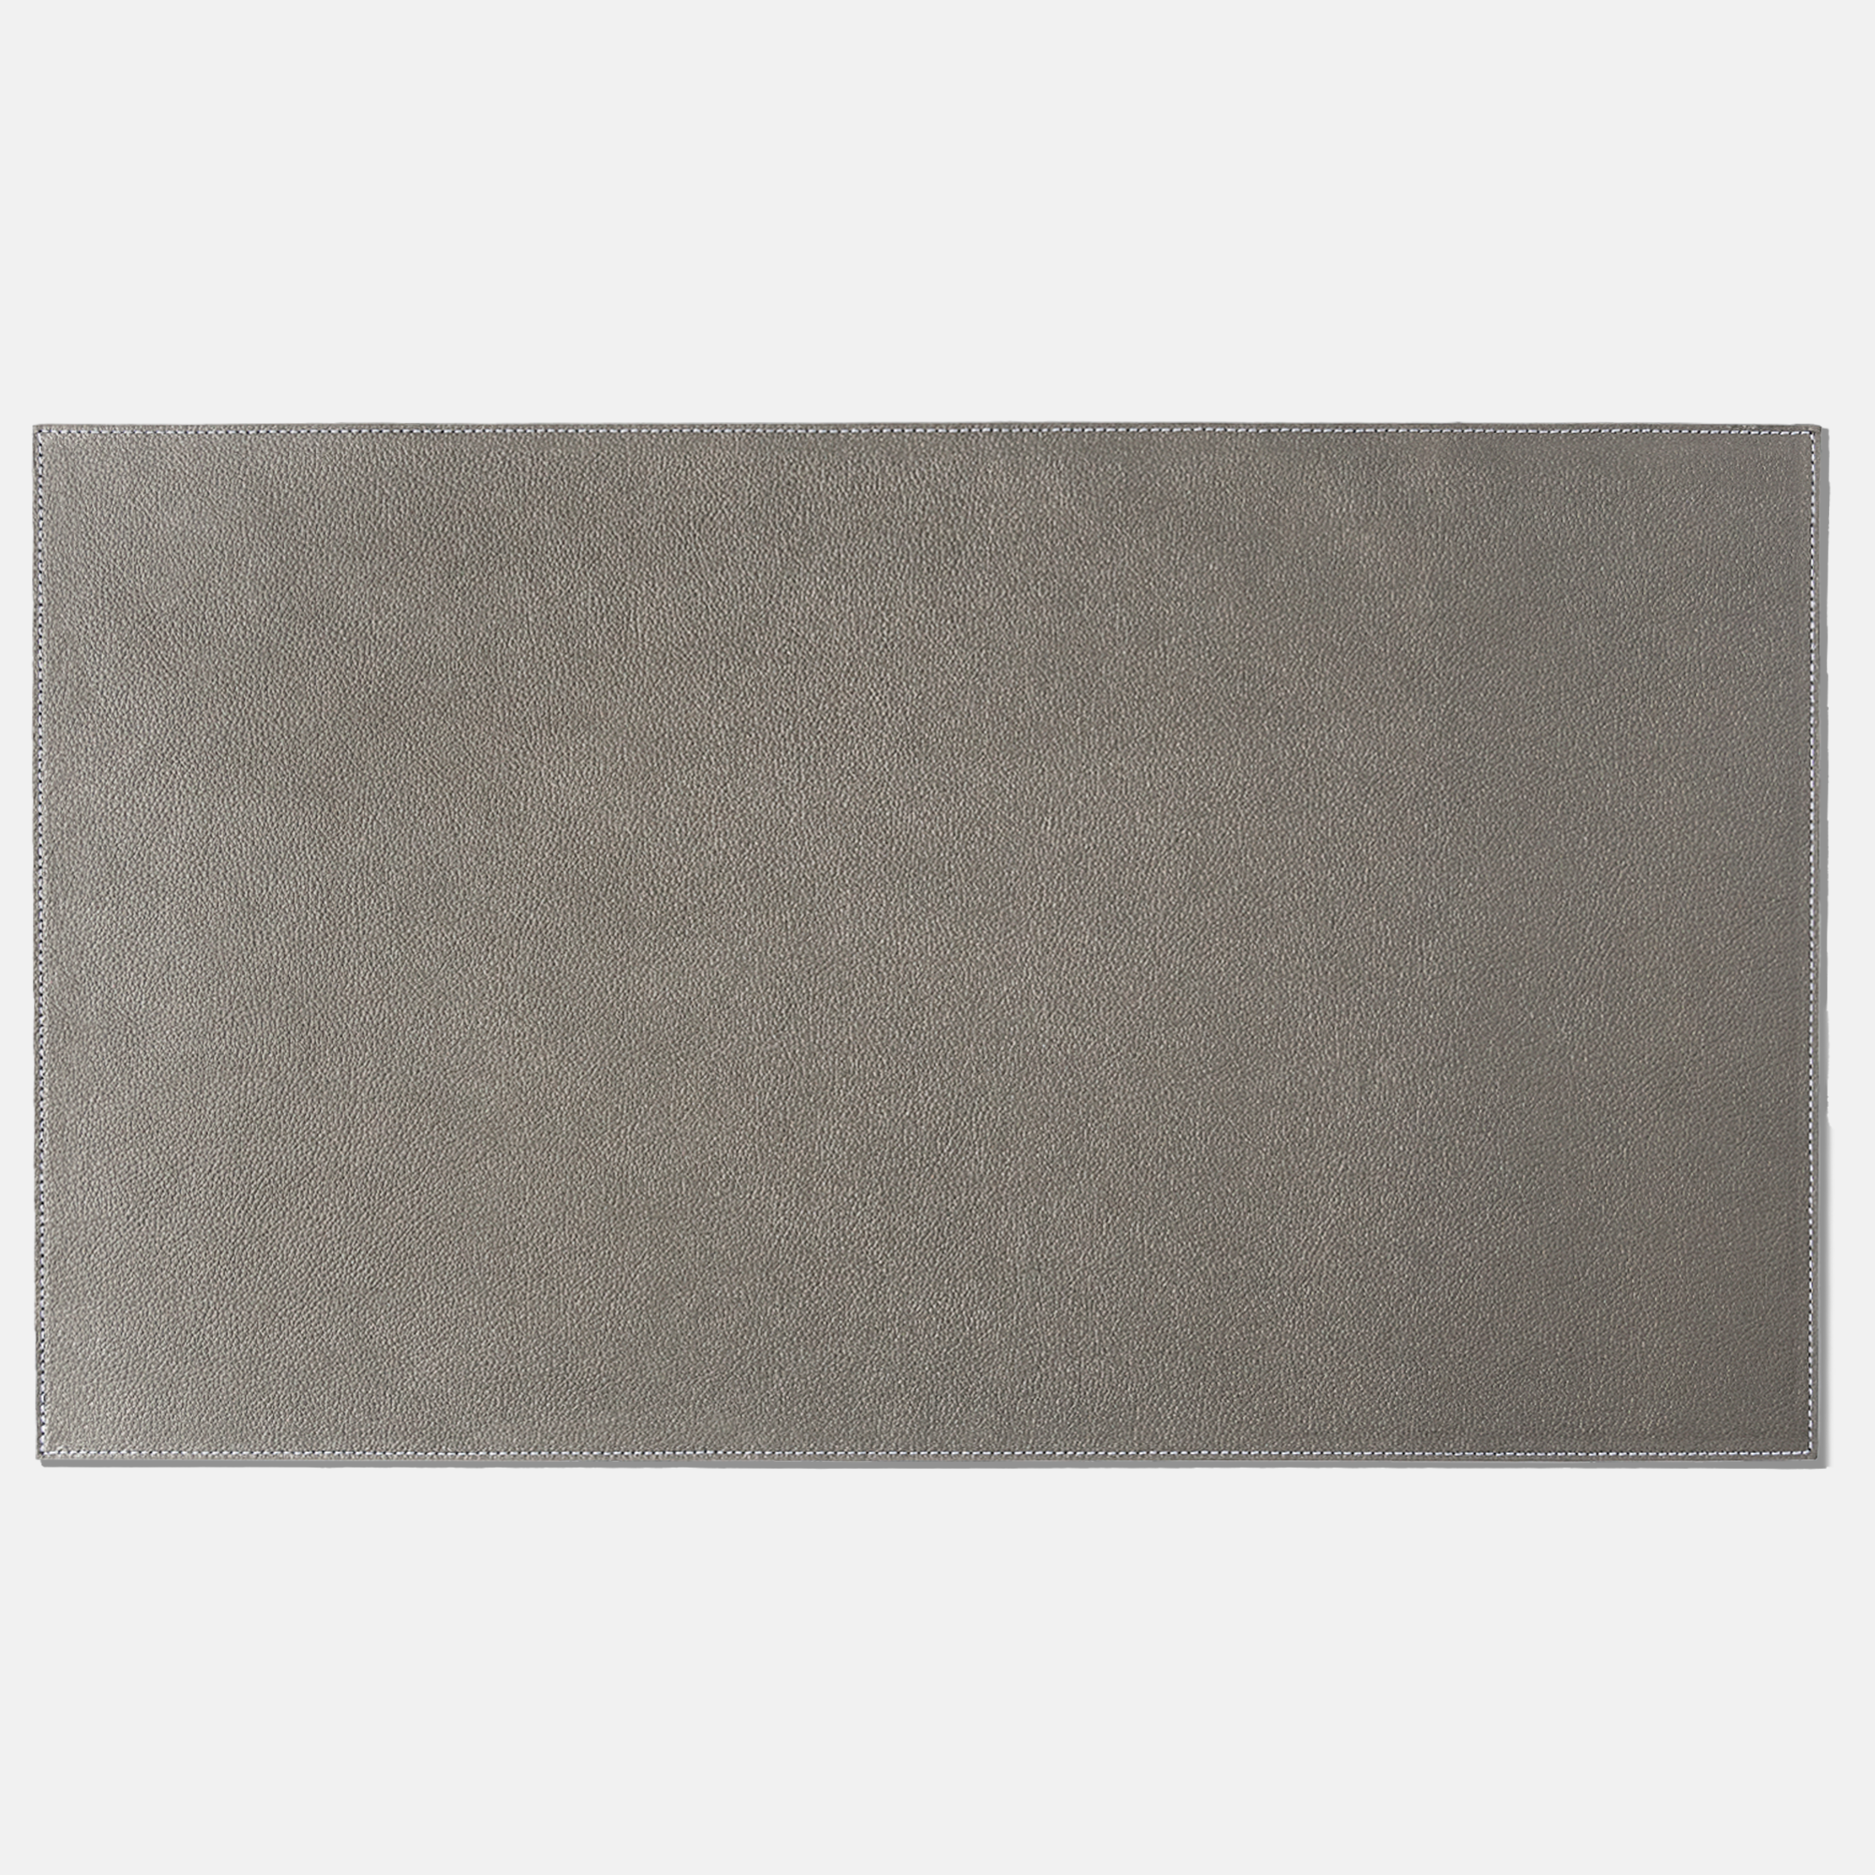 Large Leather Base - Classic Gray